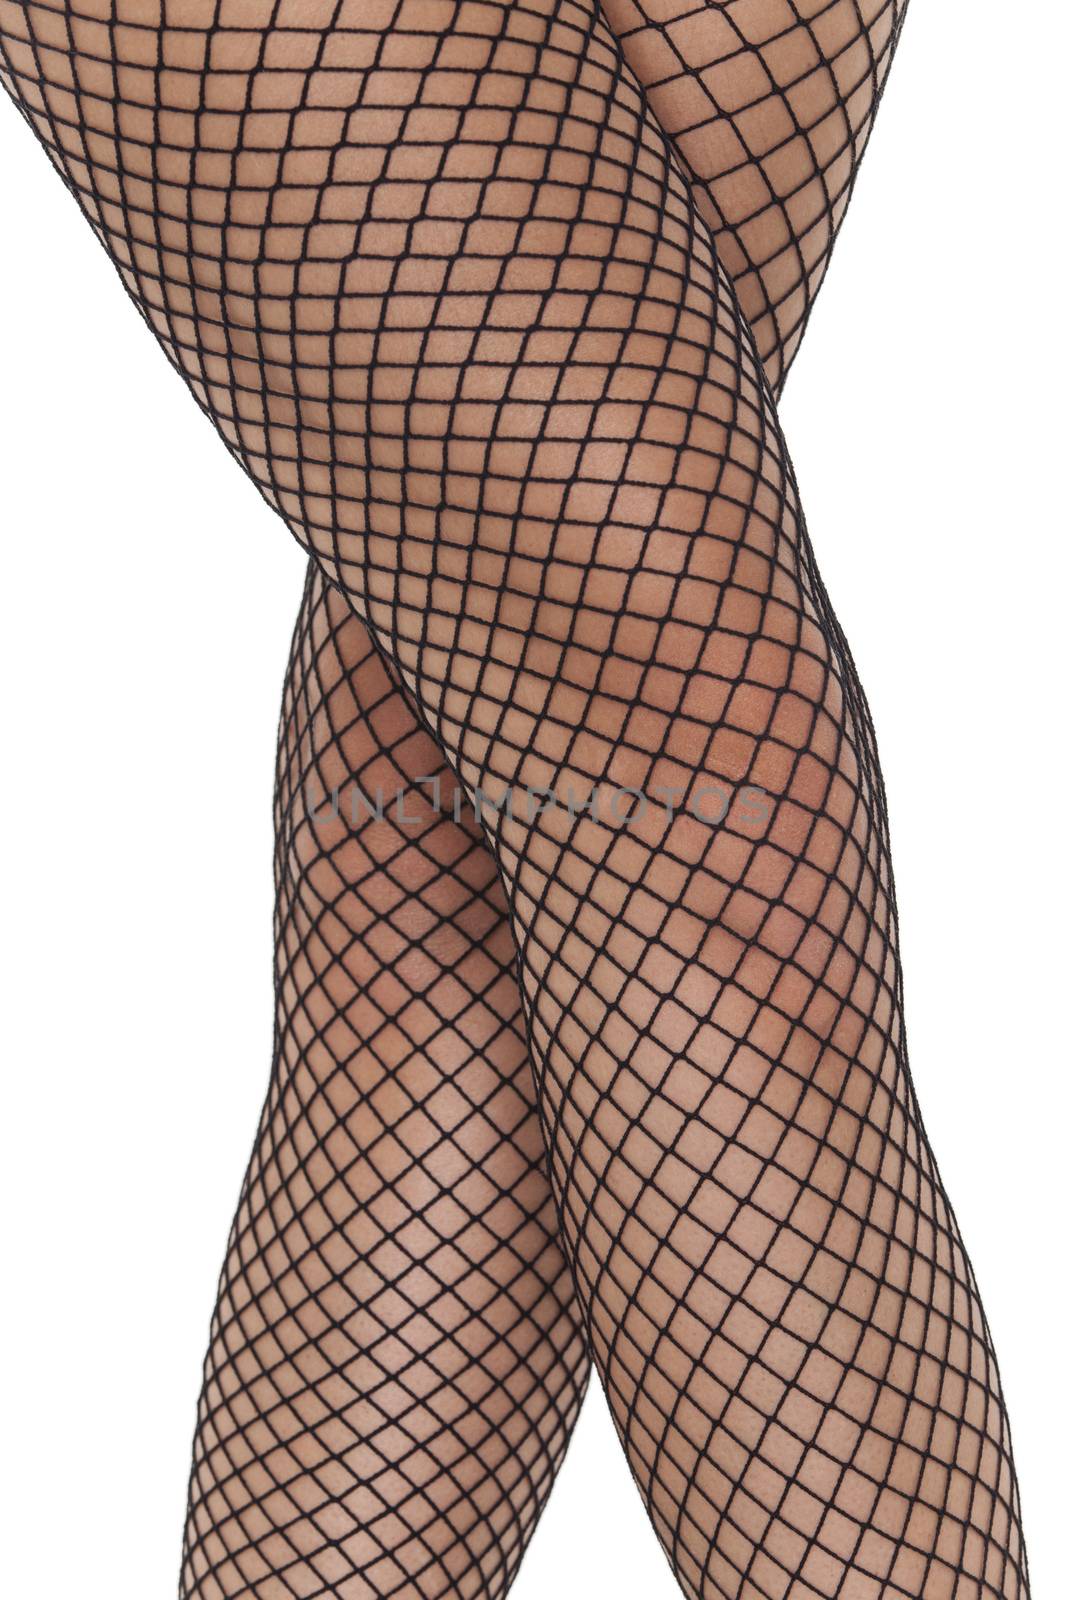 womans feet in fish net stockings by bernjuer